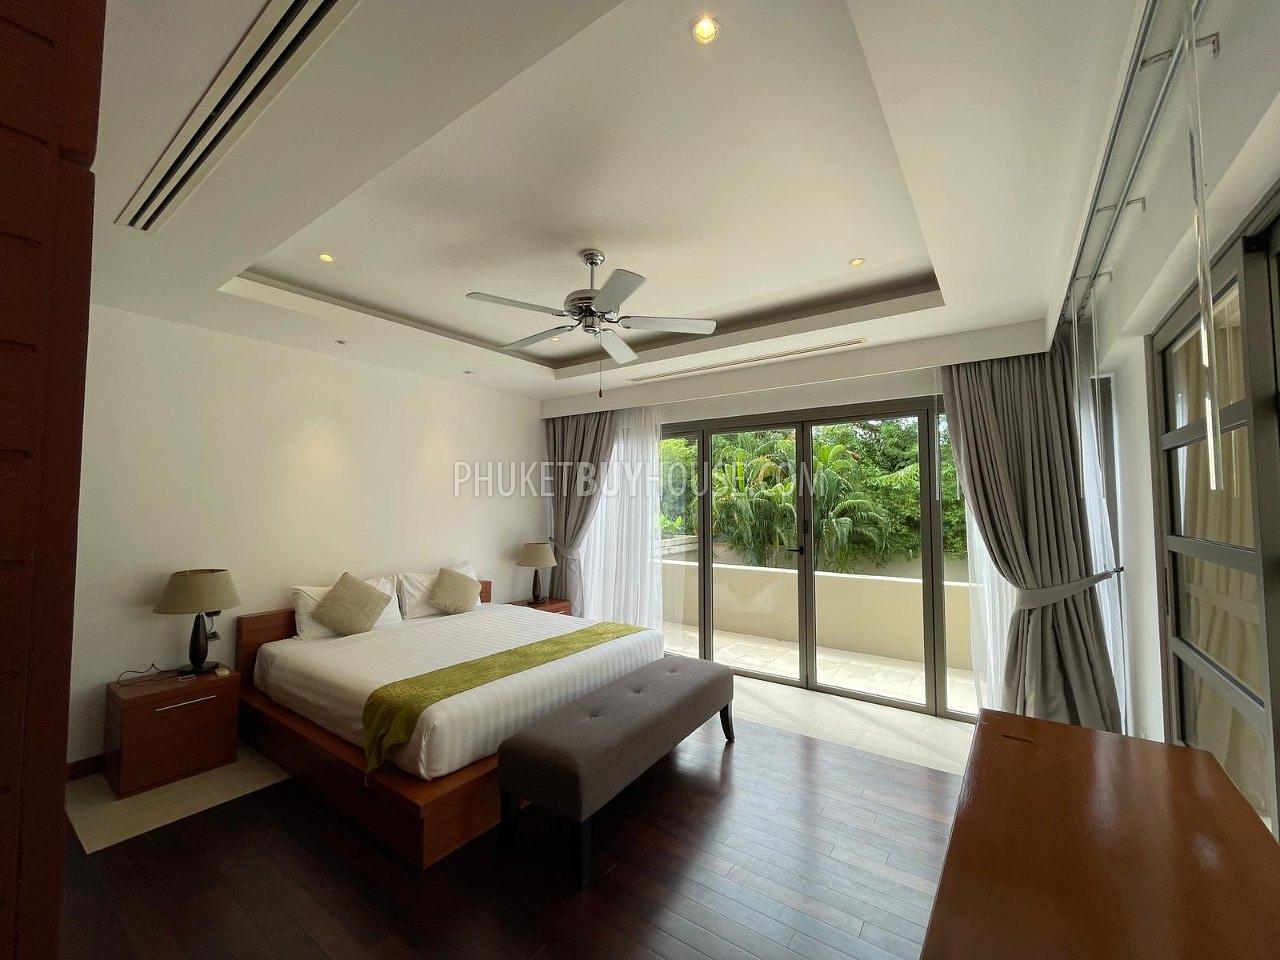 BAN6995: 2 bedroom villa in Bang Tao area. Photo #20